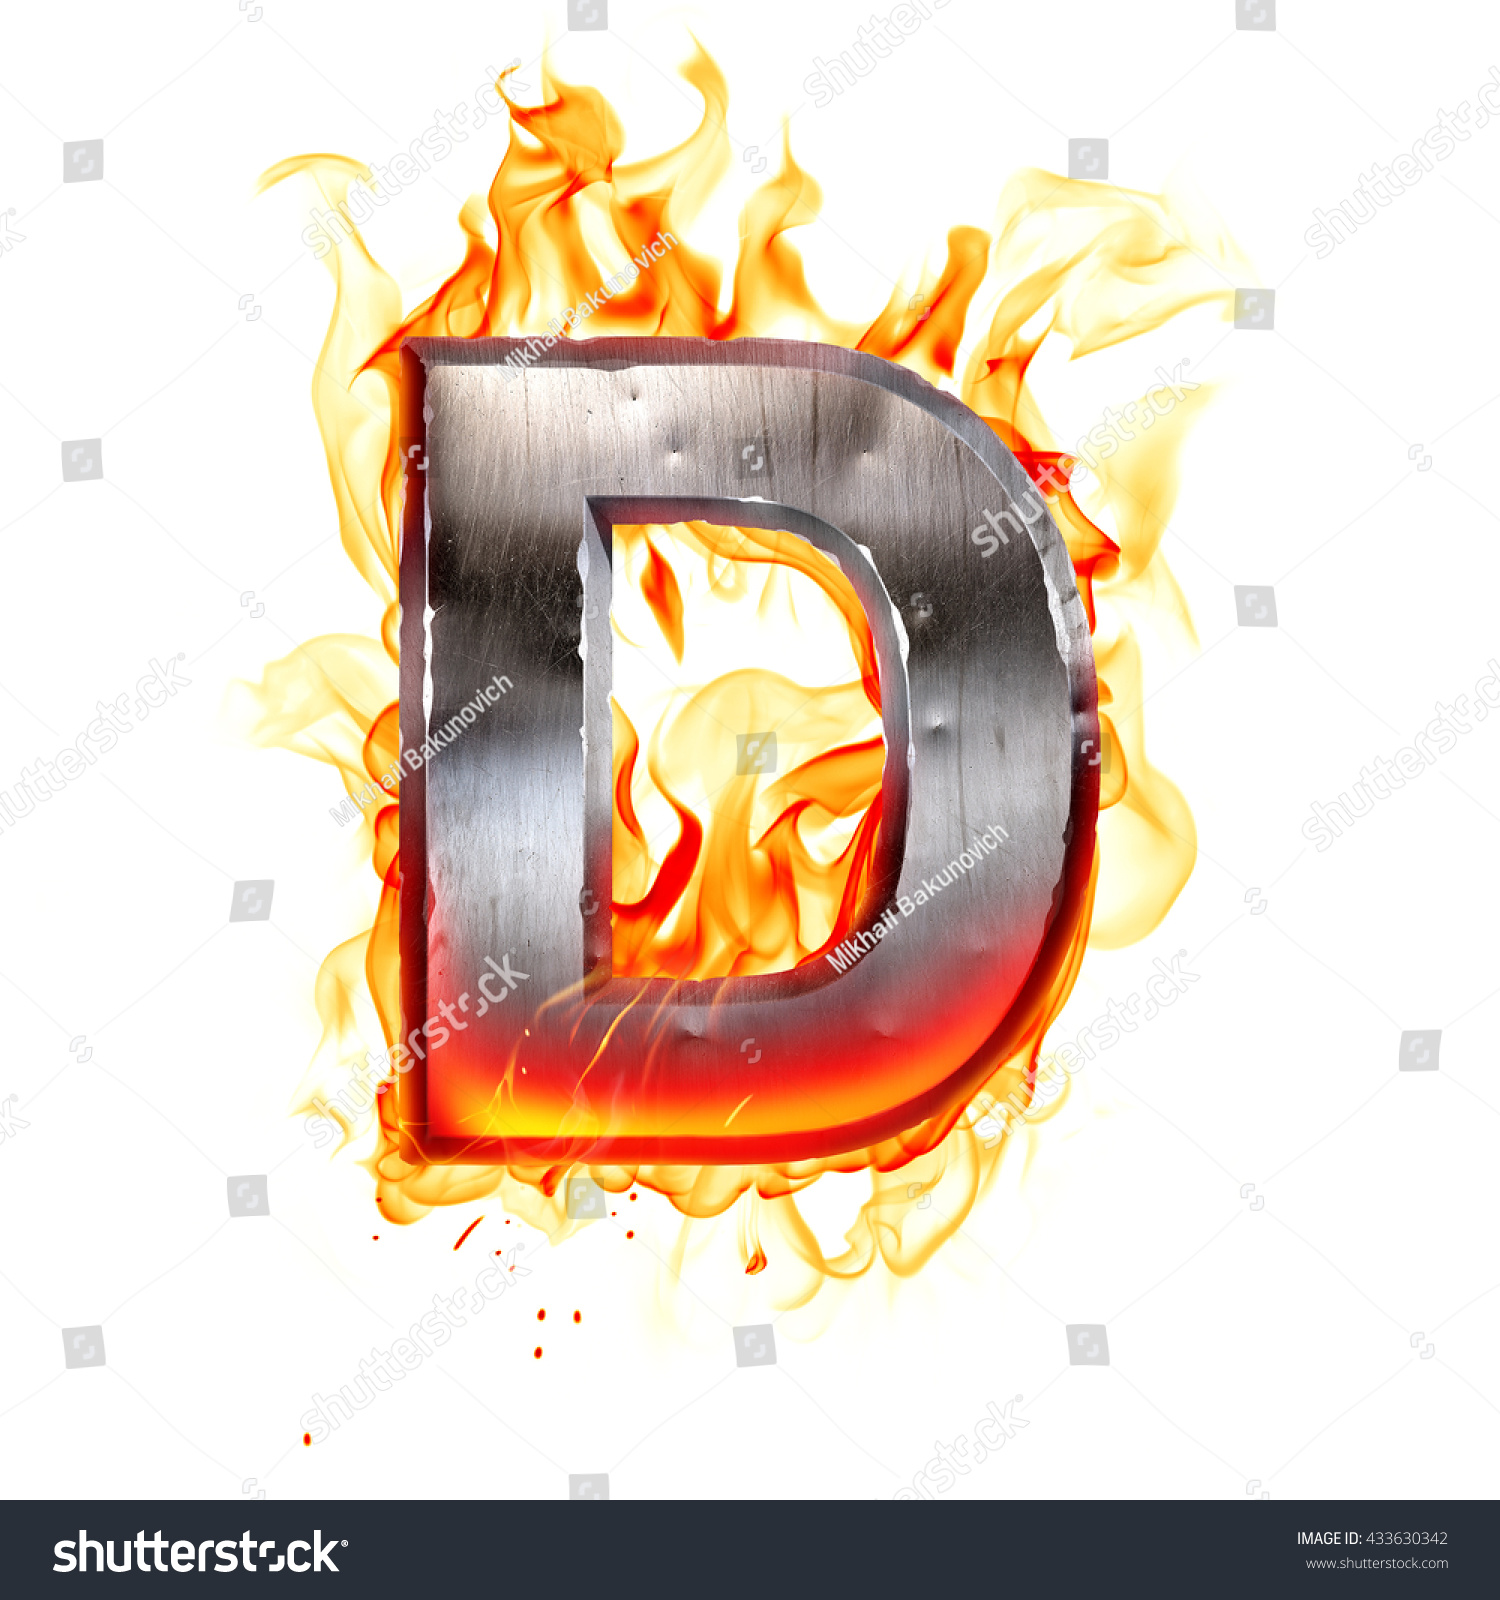 Metal Letter On Fire 3d Illustration Stock Illustration 433630342 ...